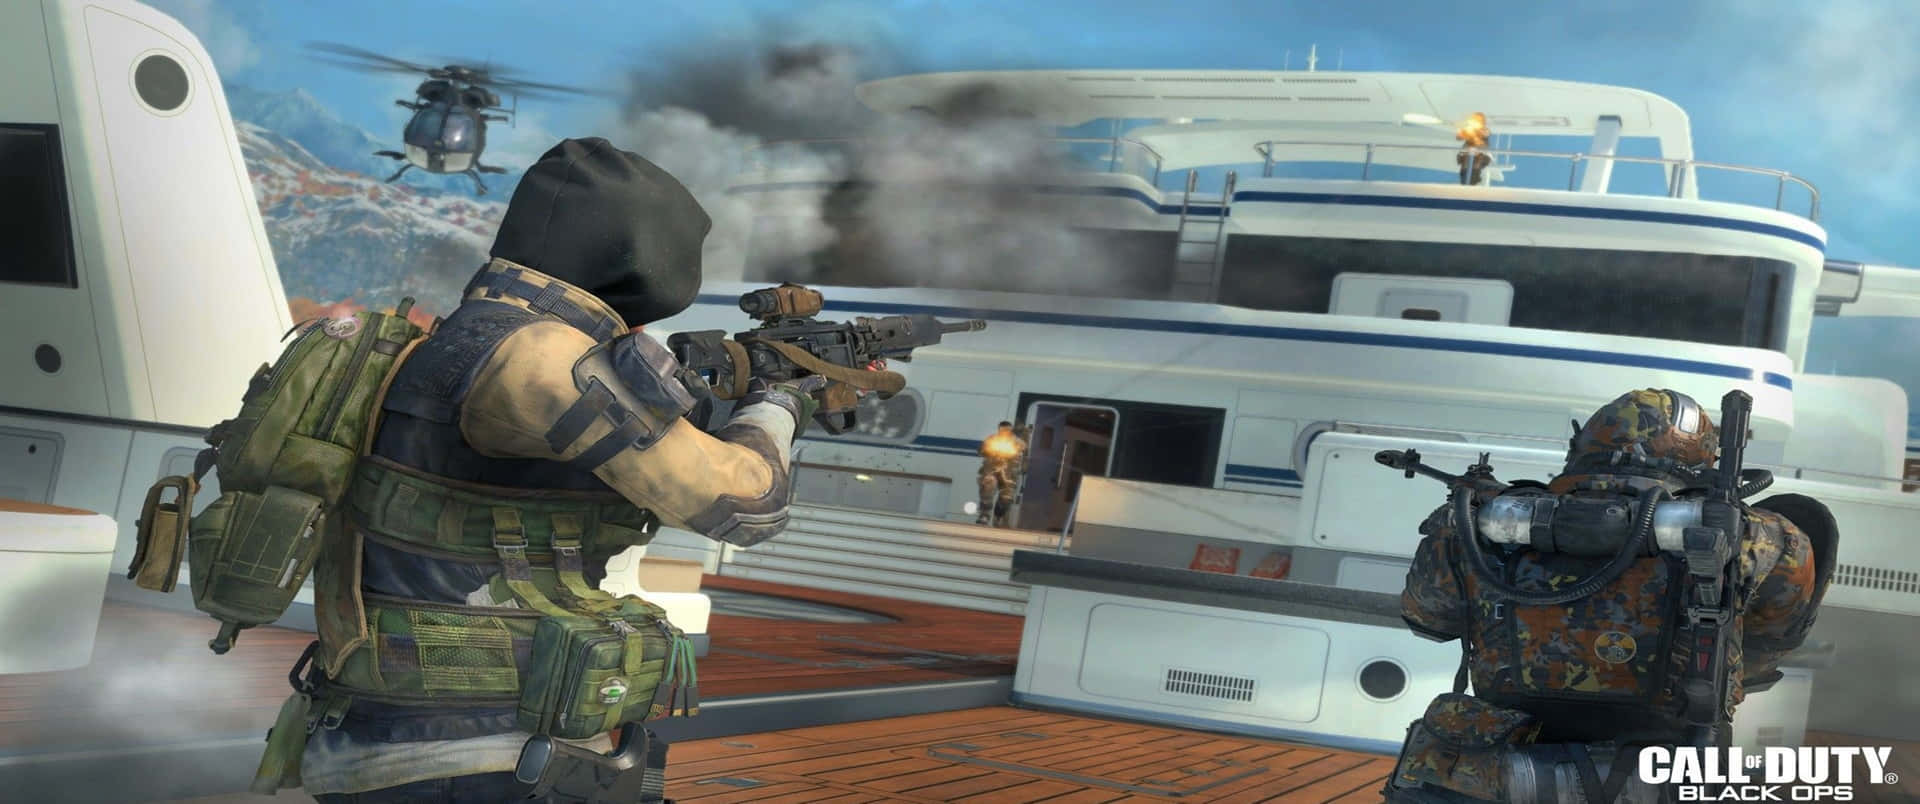 3440x1440pcall Of Duty Black Ops Cold War Hijacked Bakgrundsbild.